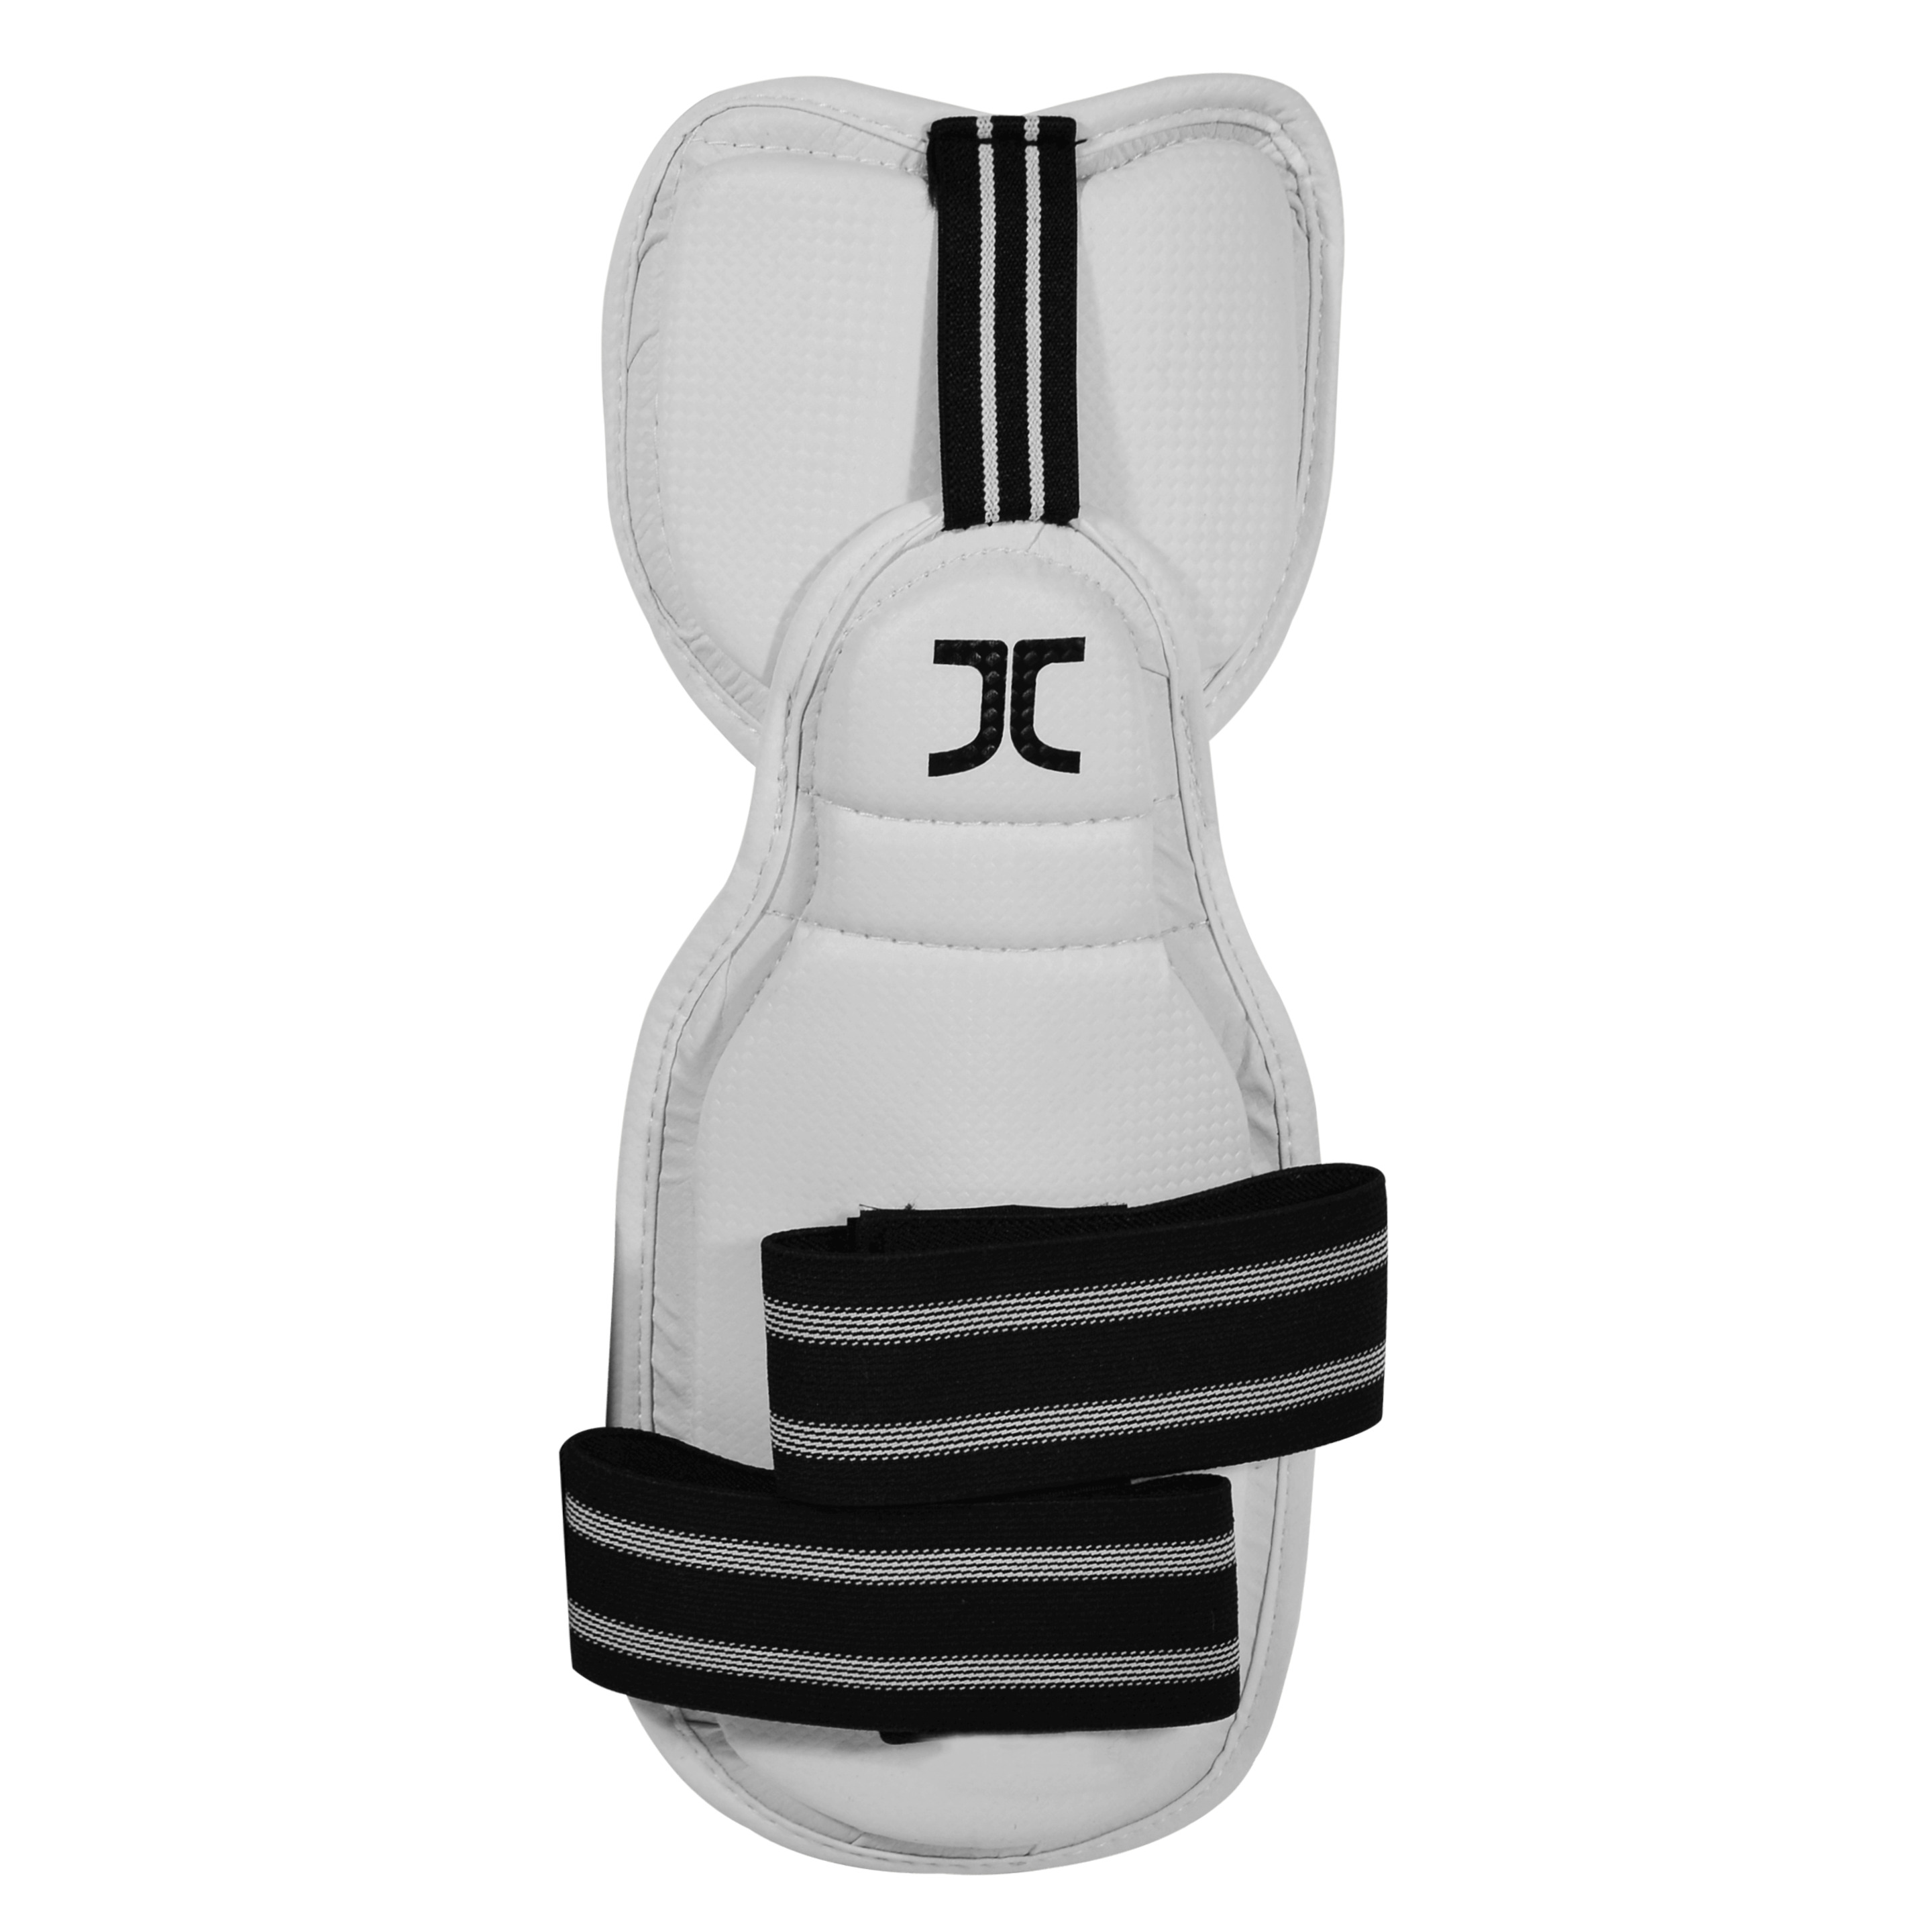 Antebrazos De Taekwondo Con Codo Jc - Blanco  MKP